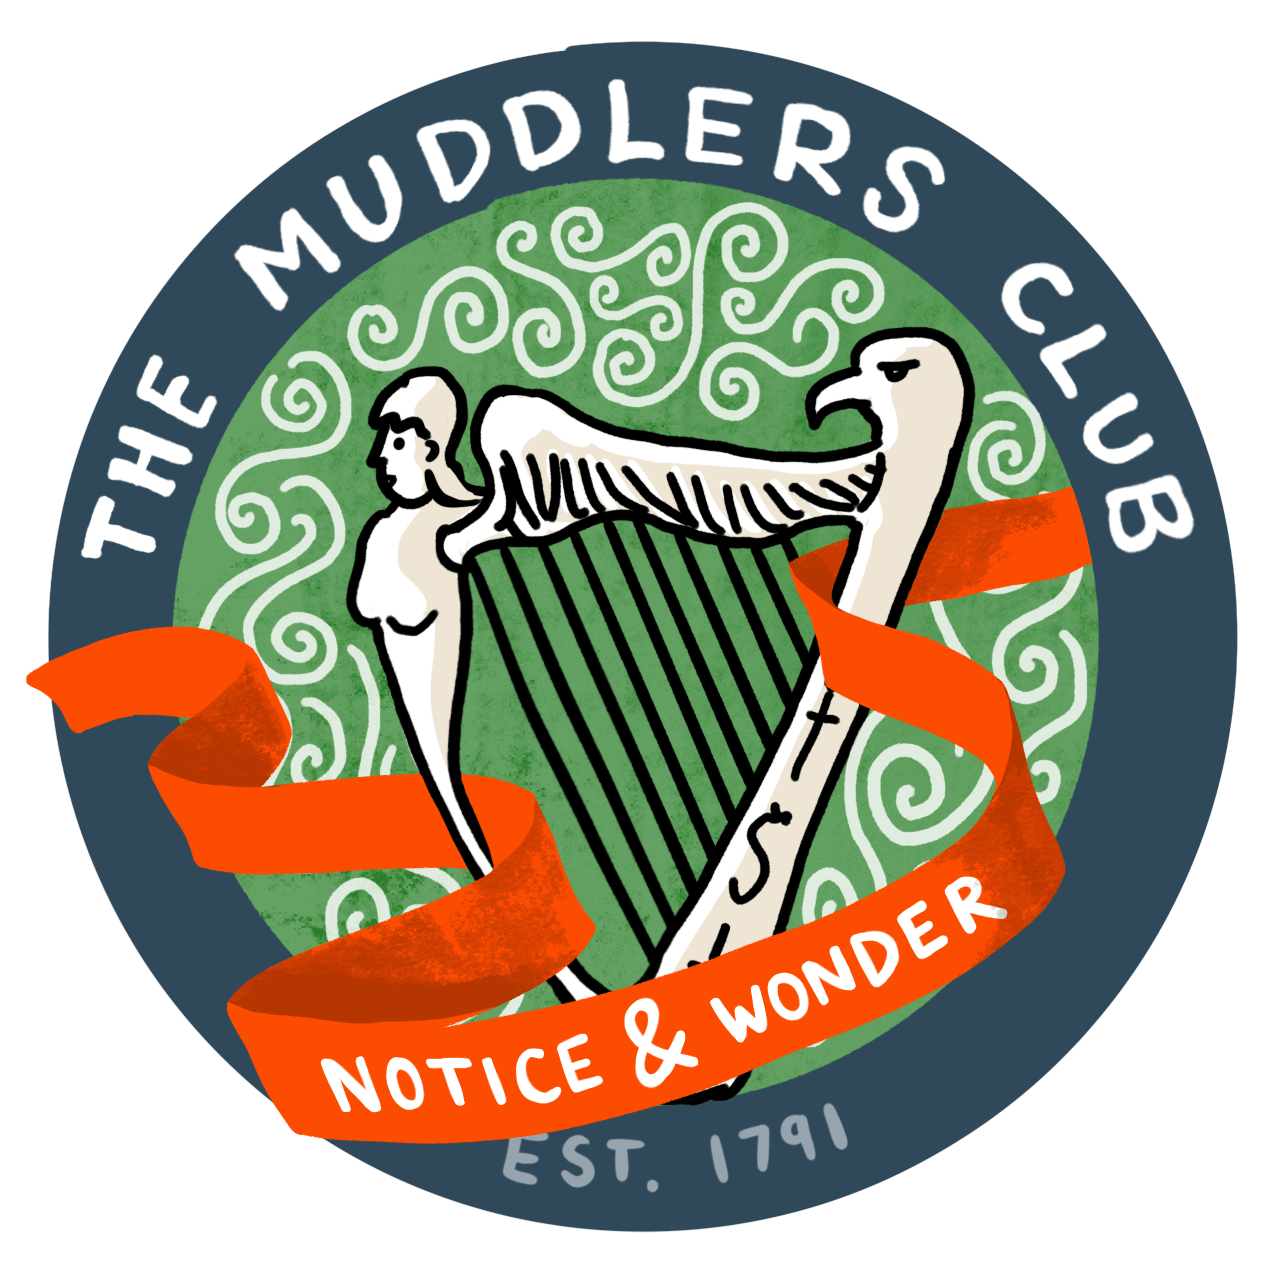 The Muddlers Club logo